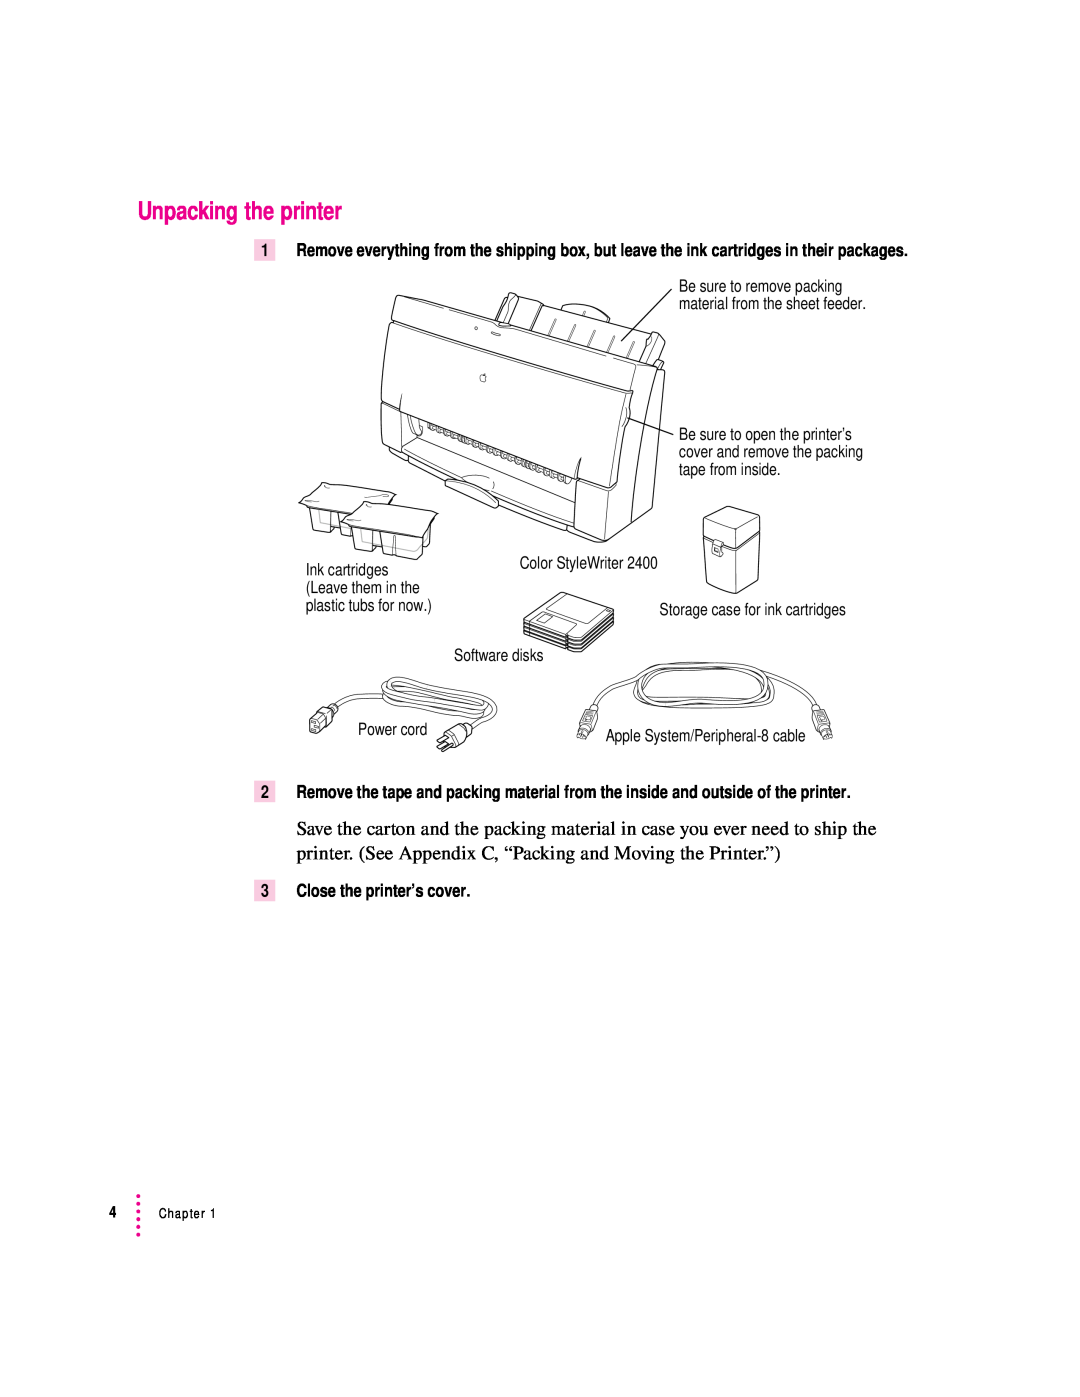 Apple 2400 manual Unpacking the printer, Close the printer’s cover 